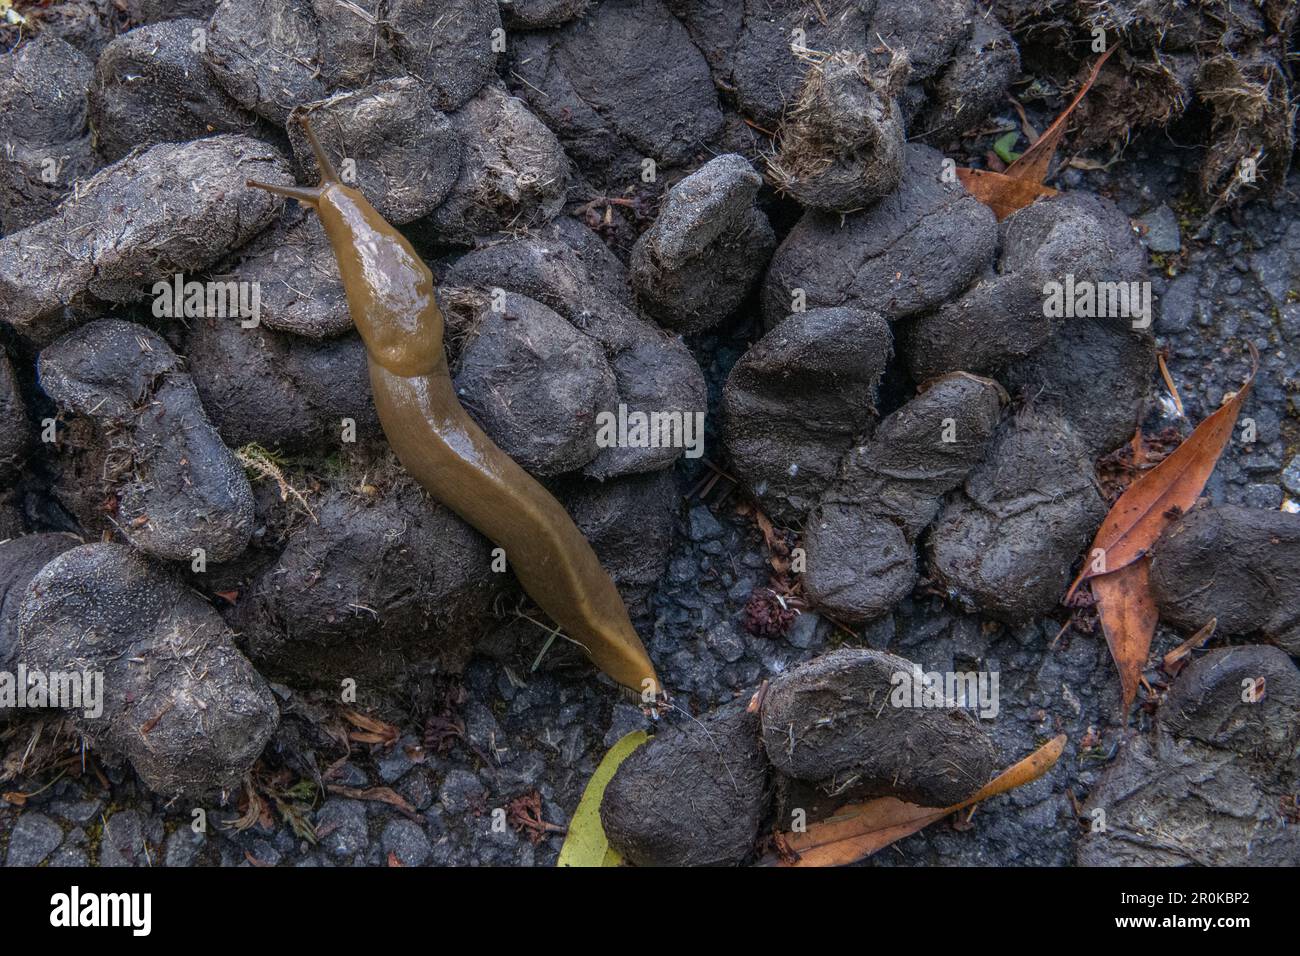 Button's Banana Slug (Ariolimax buttoni) scavenging horse dung on a California trail. Stock Photo